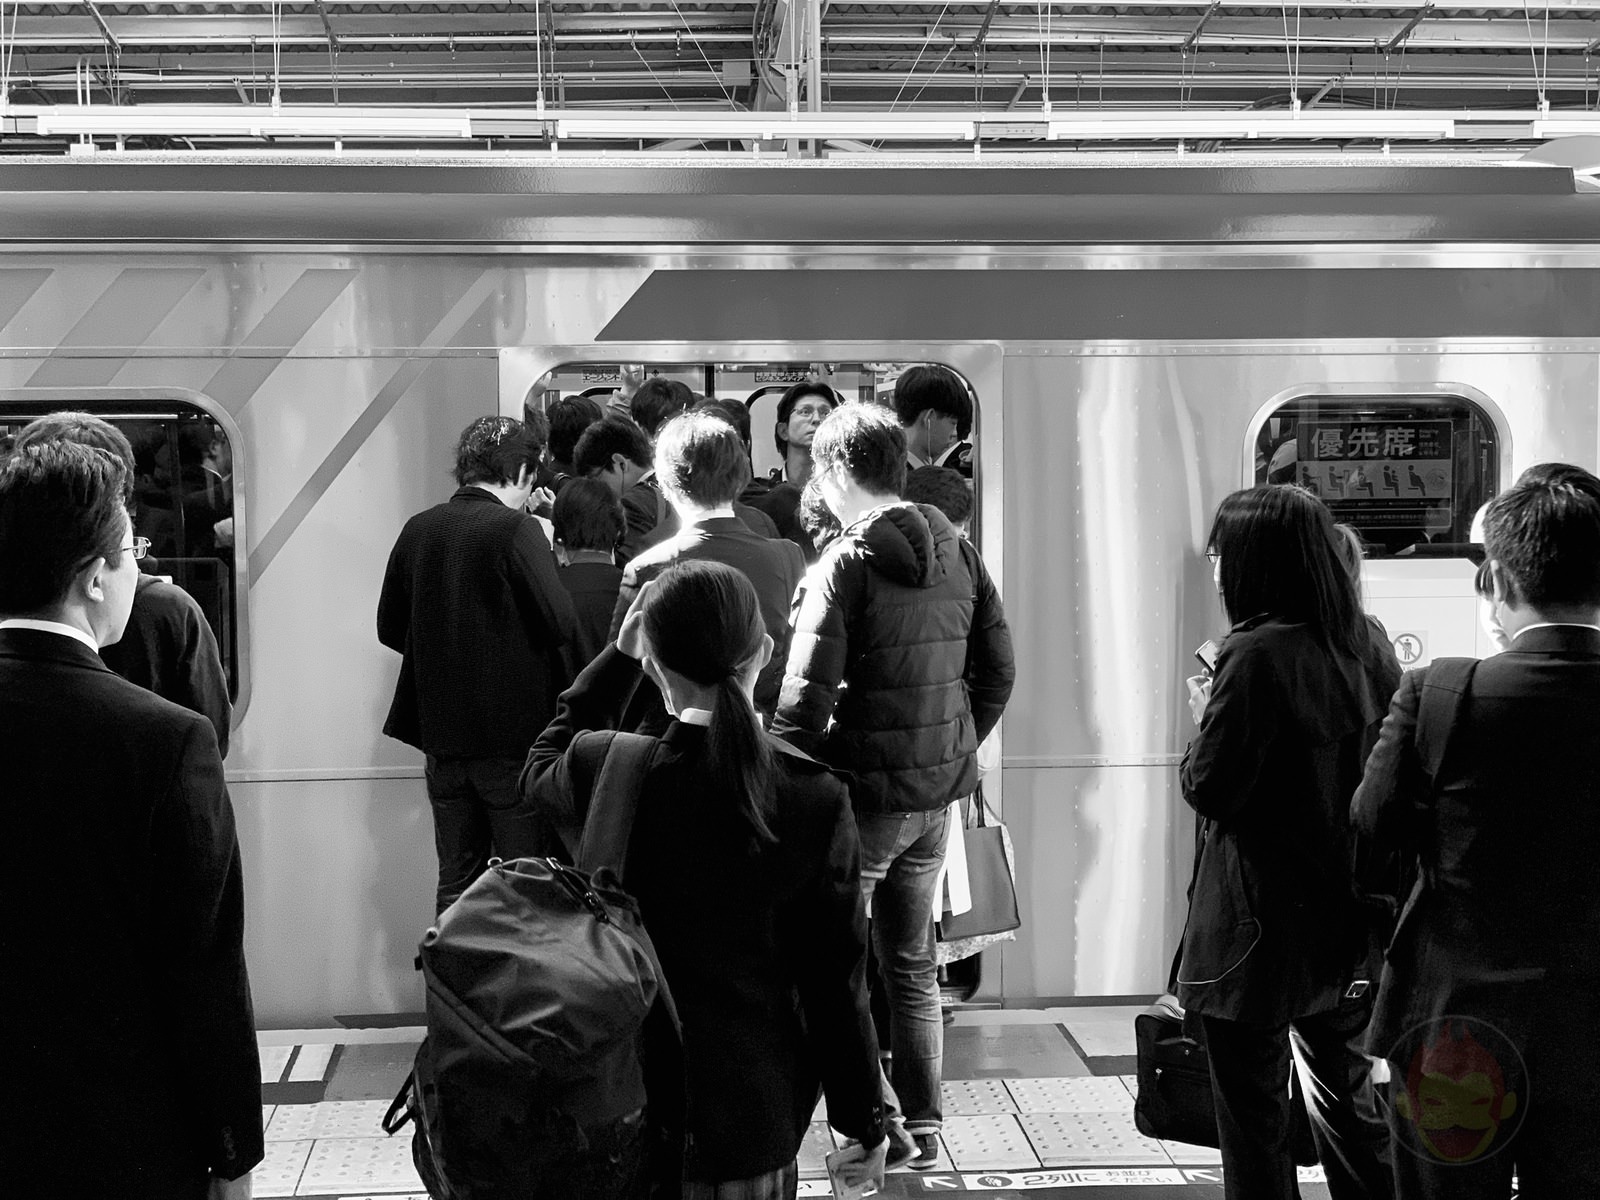 Crammed-Train-Ride-on-Weekday-01.jpg